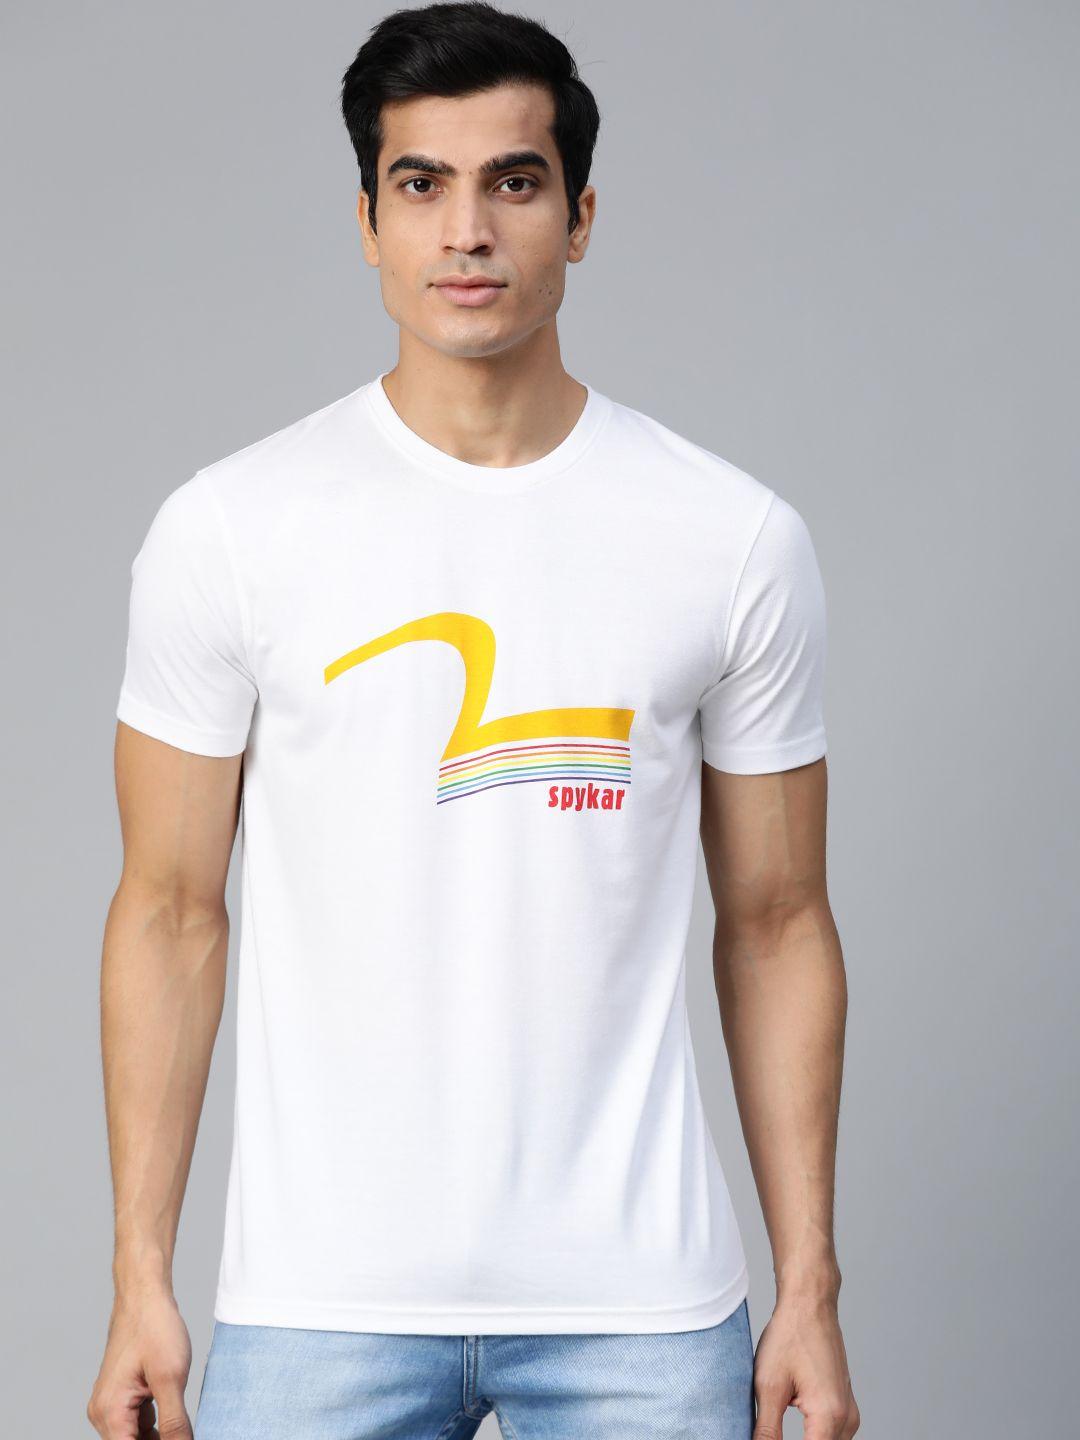 underjeans-by-spykar-men-white-printed-round-neck-t-shirt